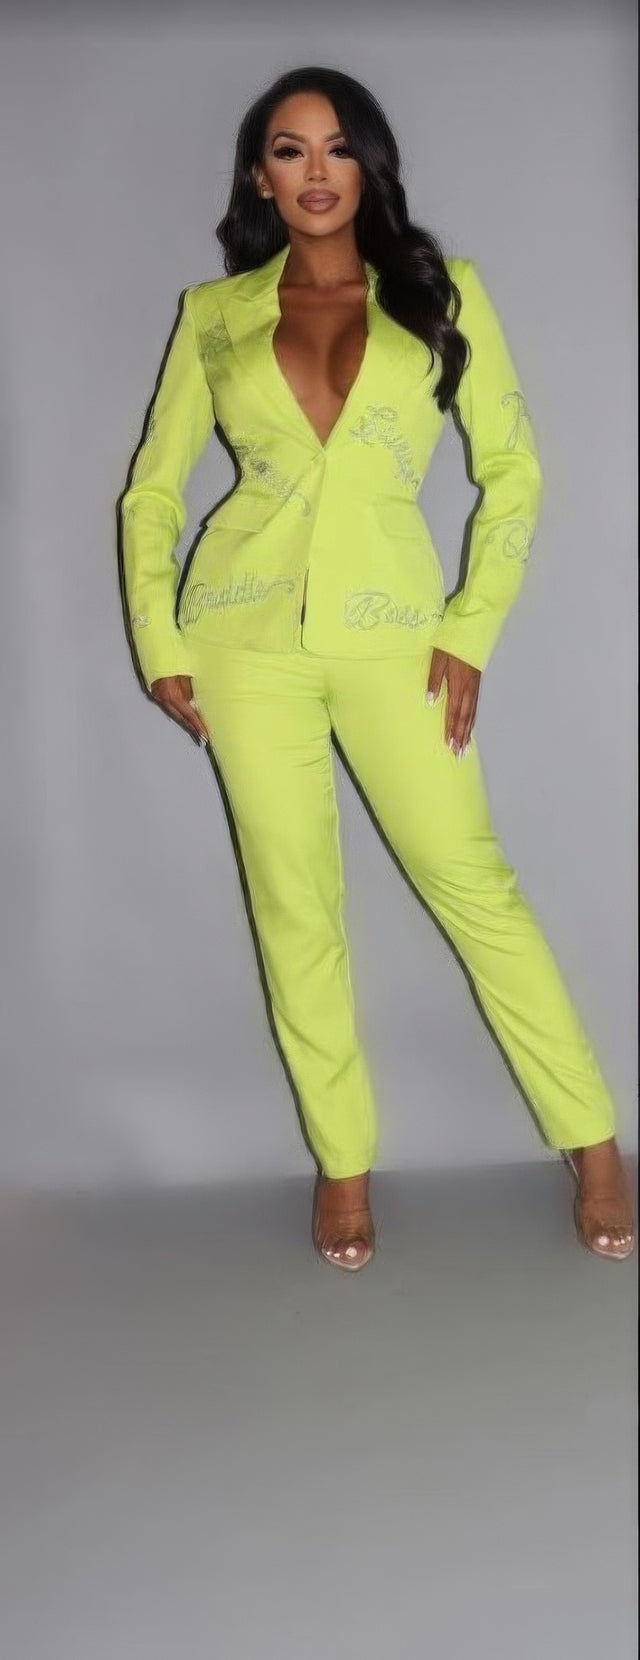 2 Piece Powersuit Blazer & Pants Set With Rhinestone Letterings On Blazer - Neon